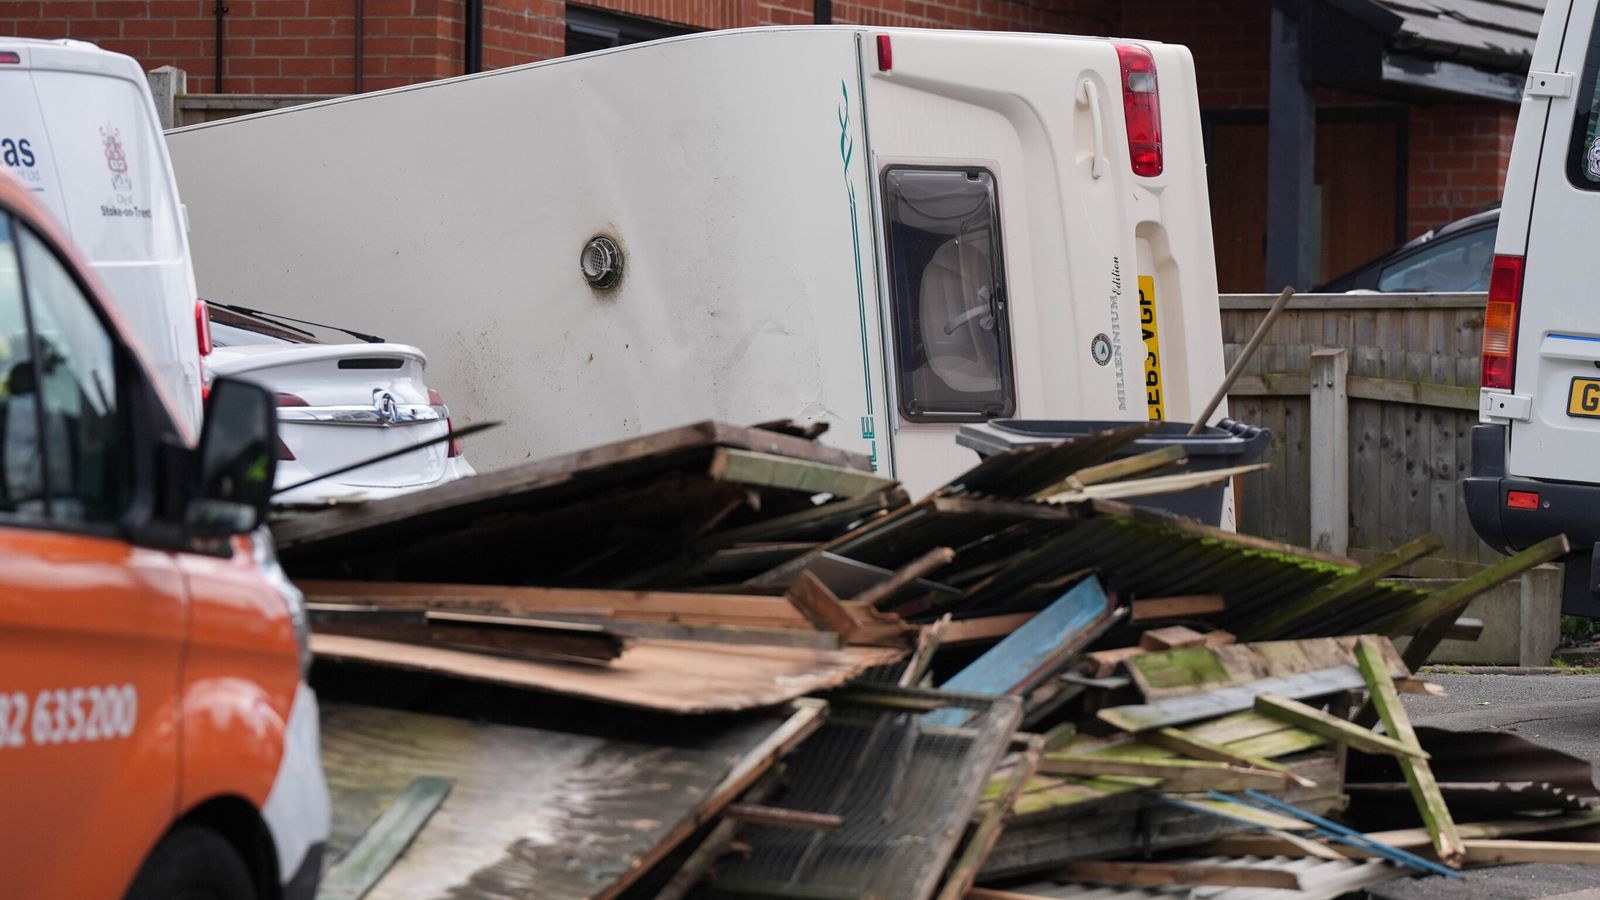 'tornado' flips caravan over as strong winds batter uk